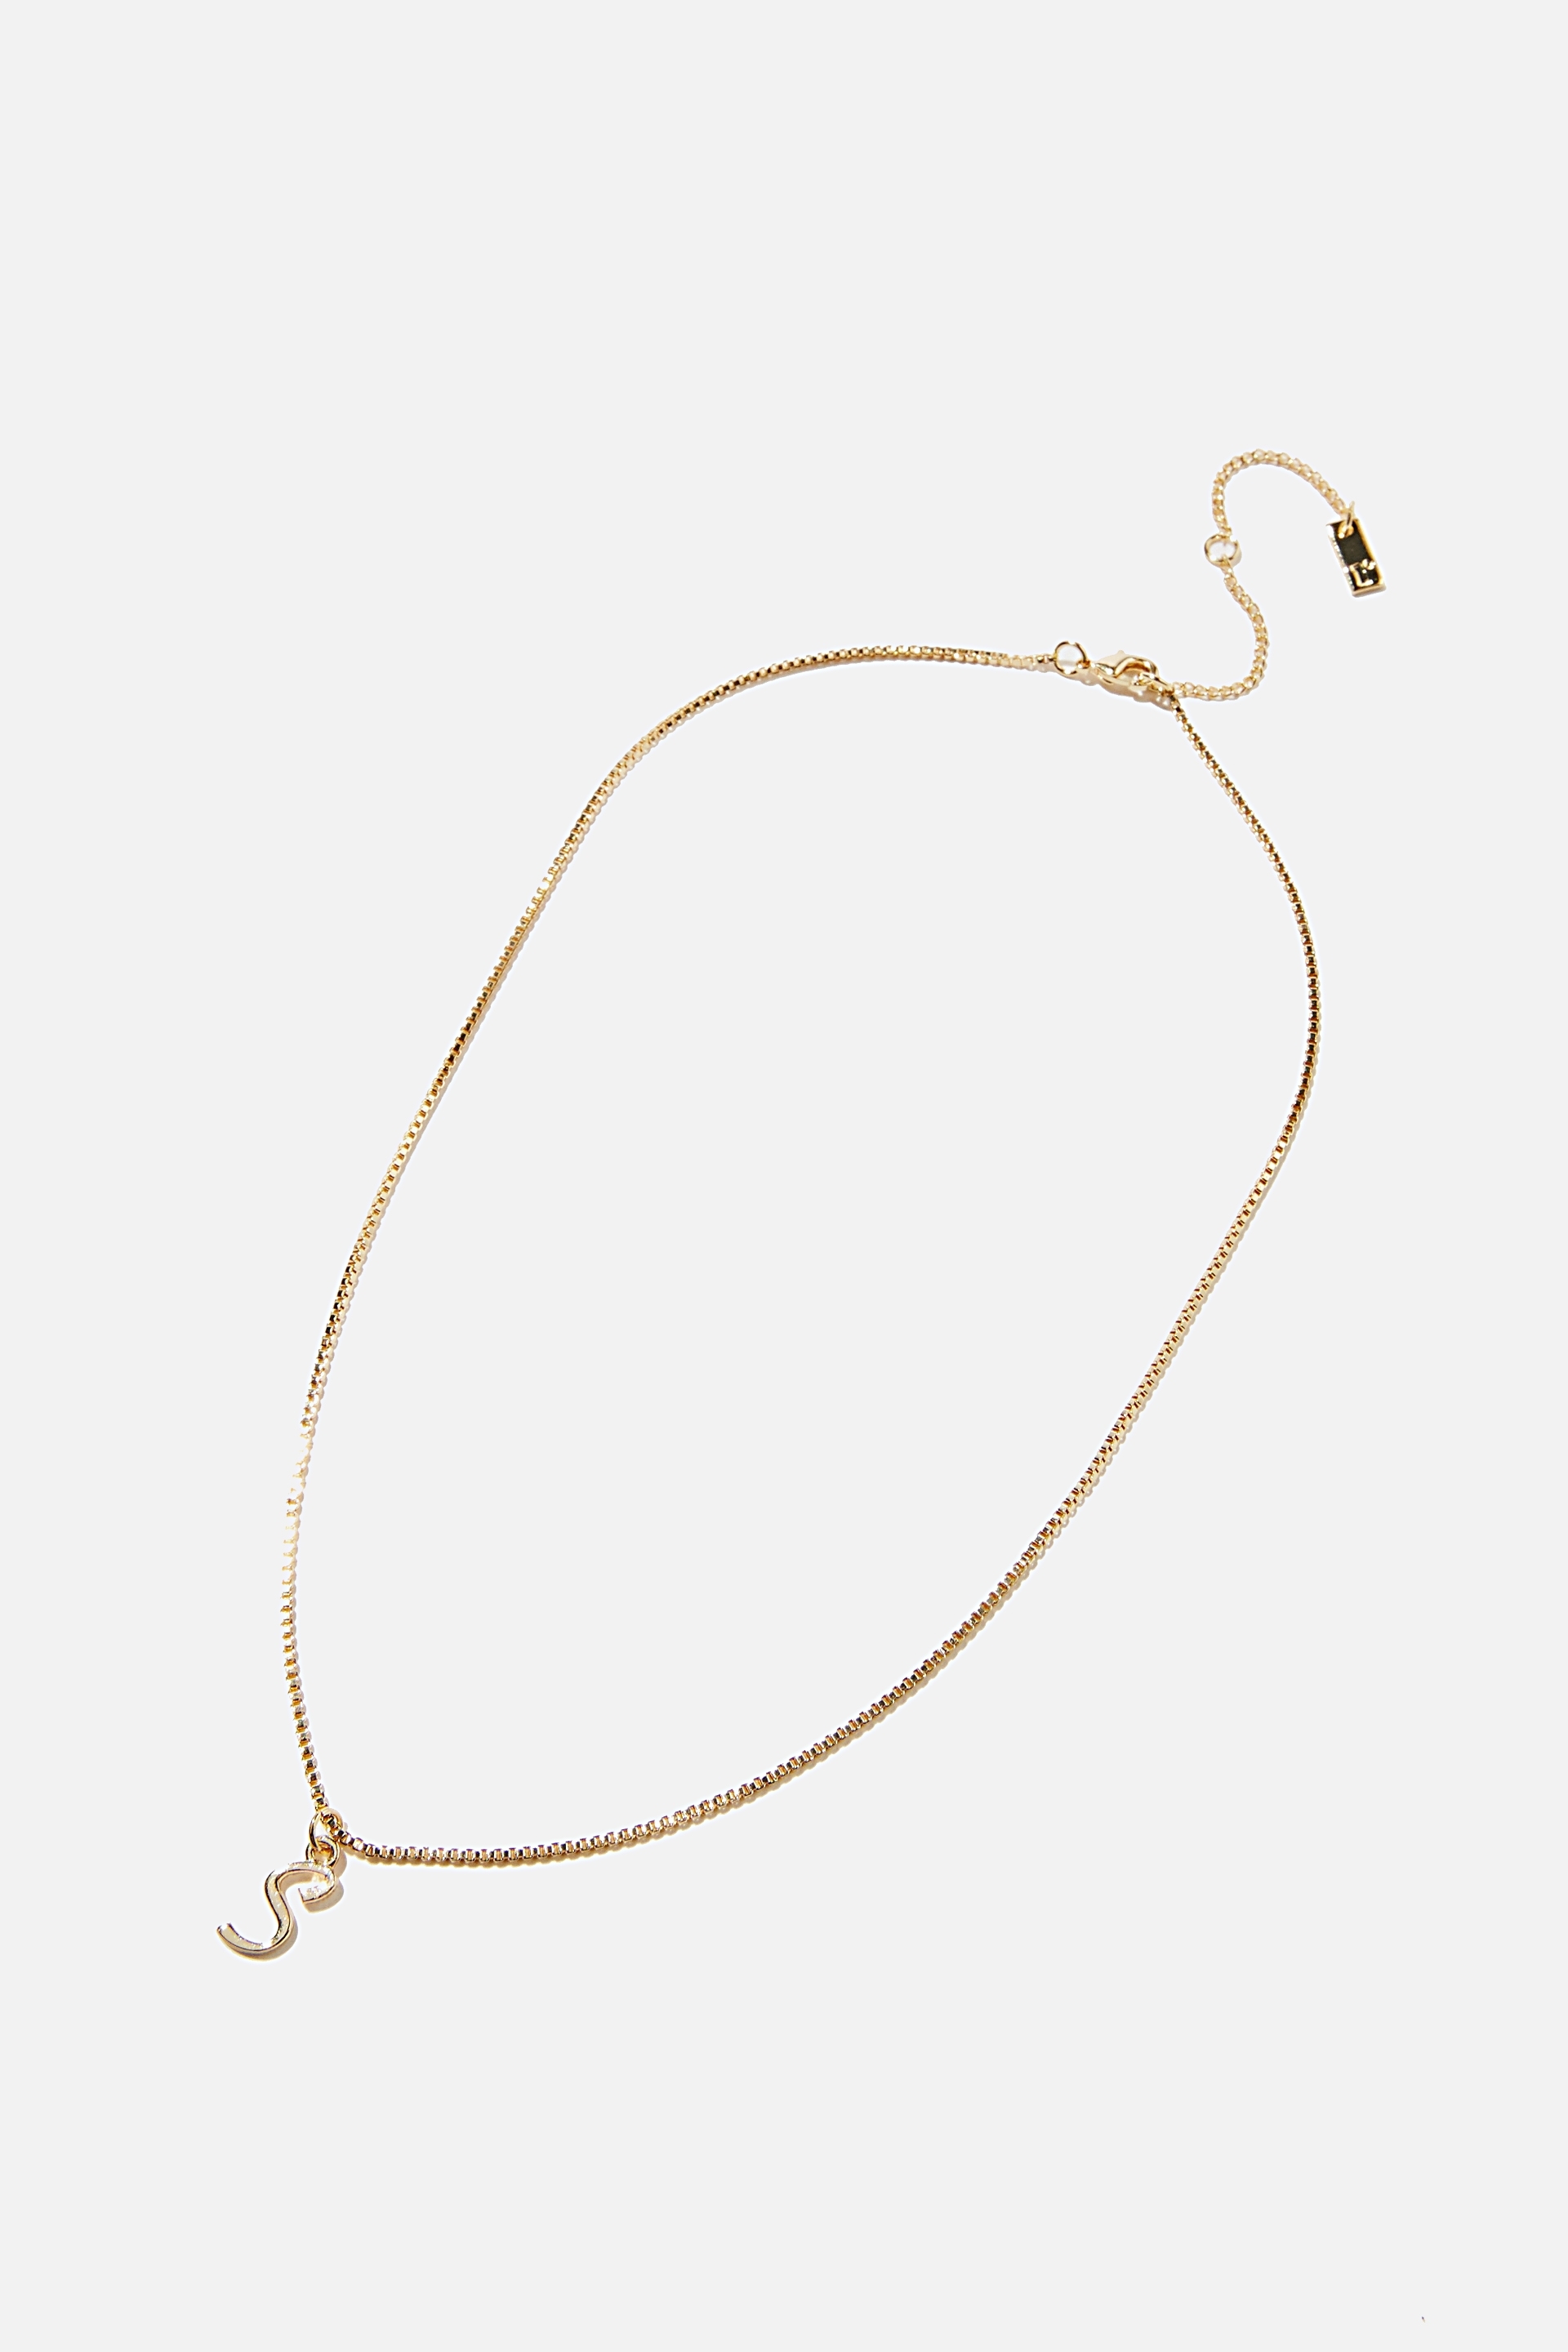 Rubi - Premium Pendant Necklace - Gold plated s